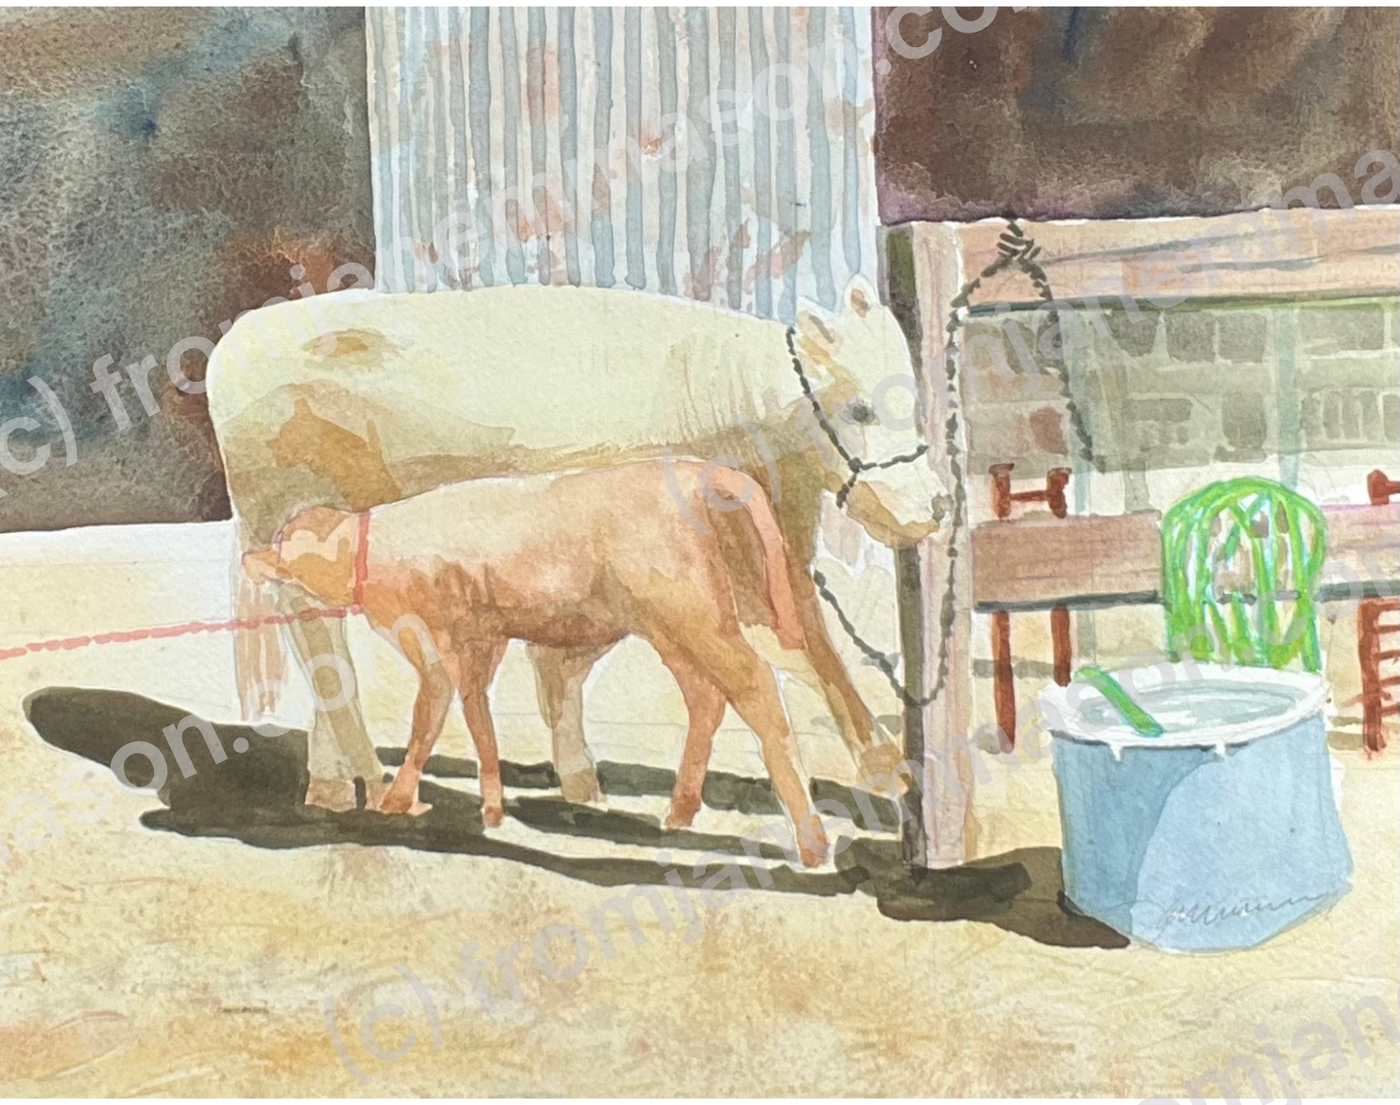 Cow and Calf, County Fair